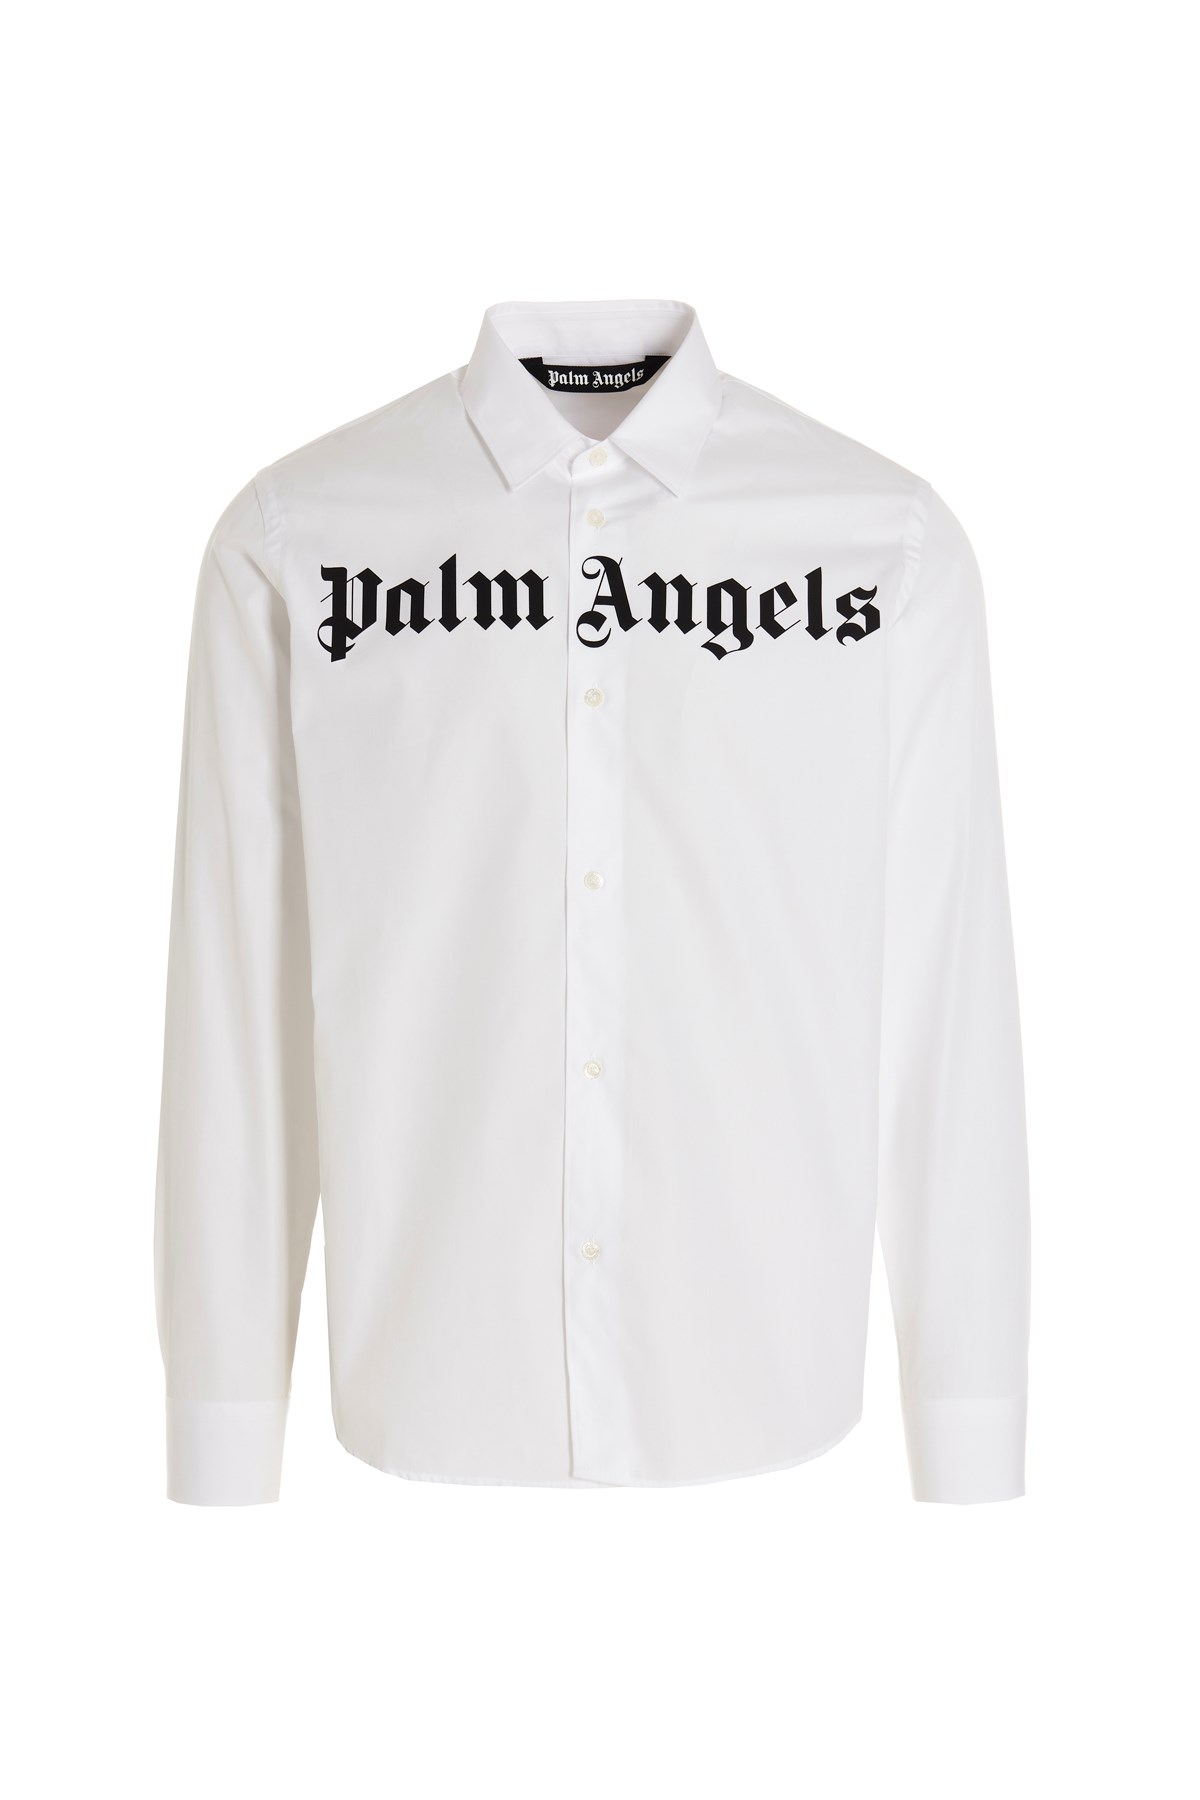 PALM ANGELS Poplin Cotton Shirt